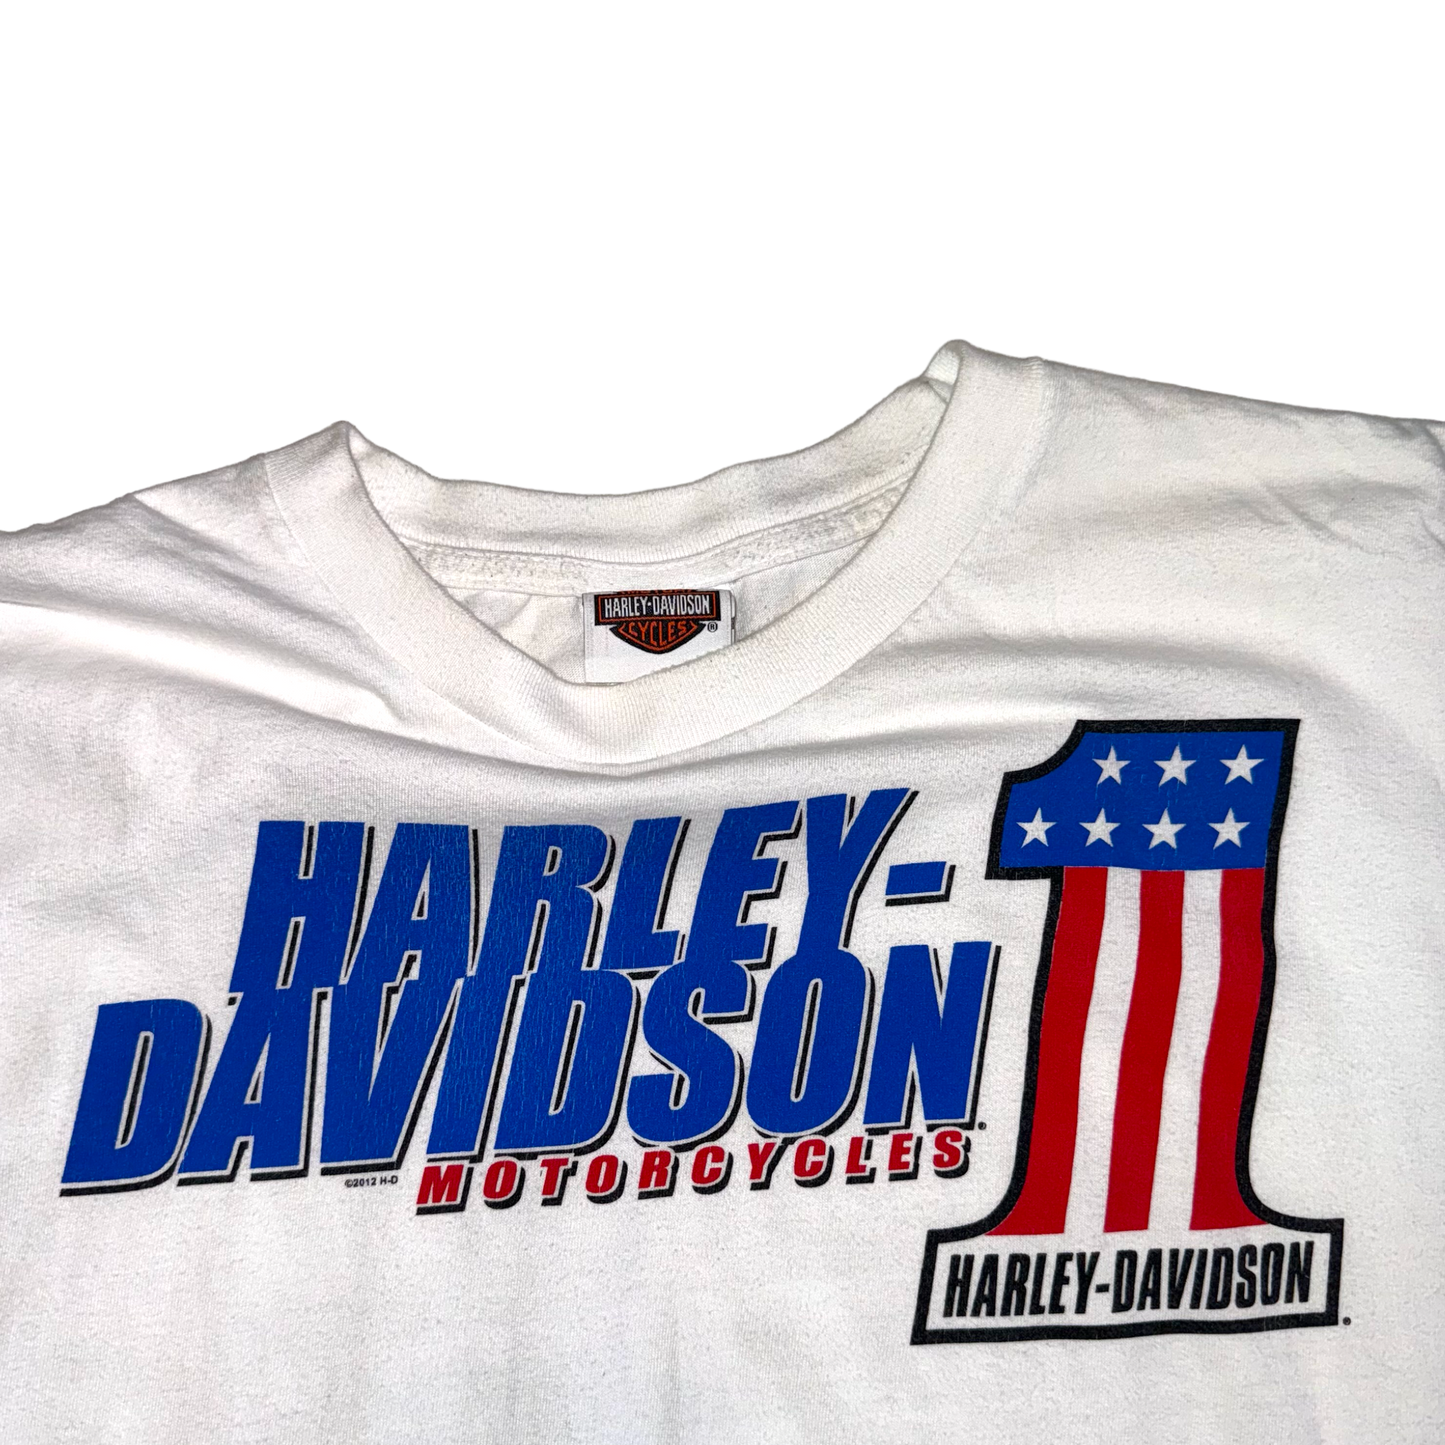 Harley Davidson - Vintage 2012 San Clemente Graphic T-Shirt